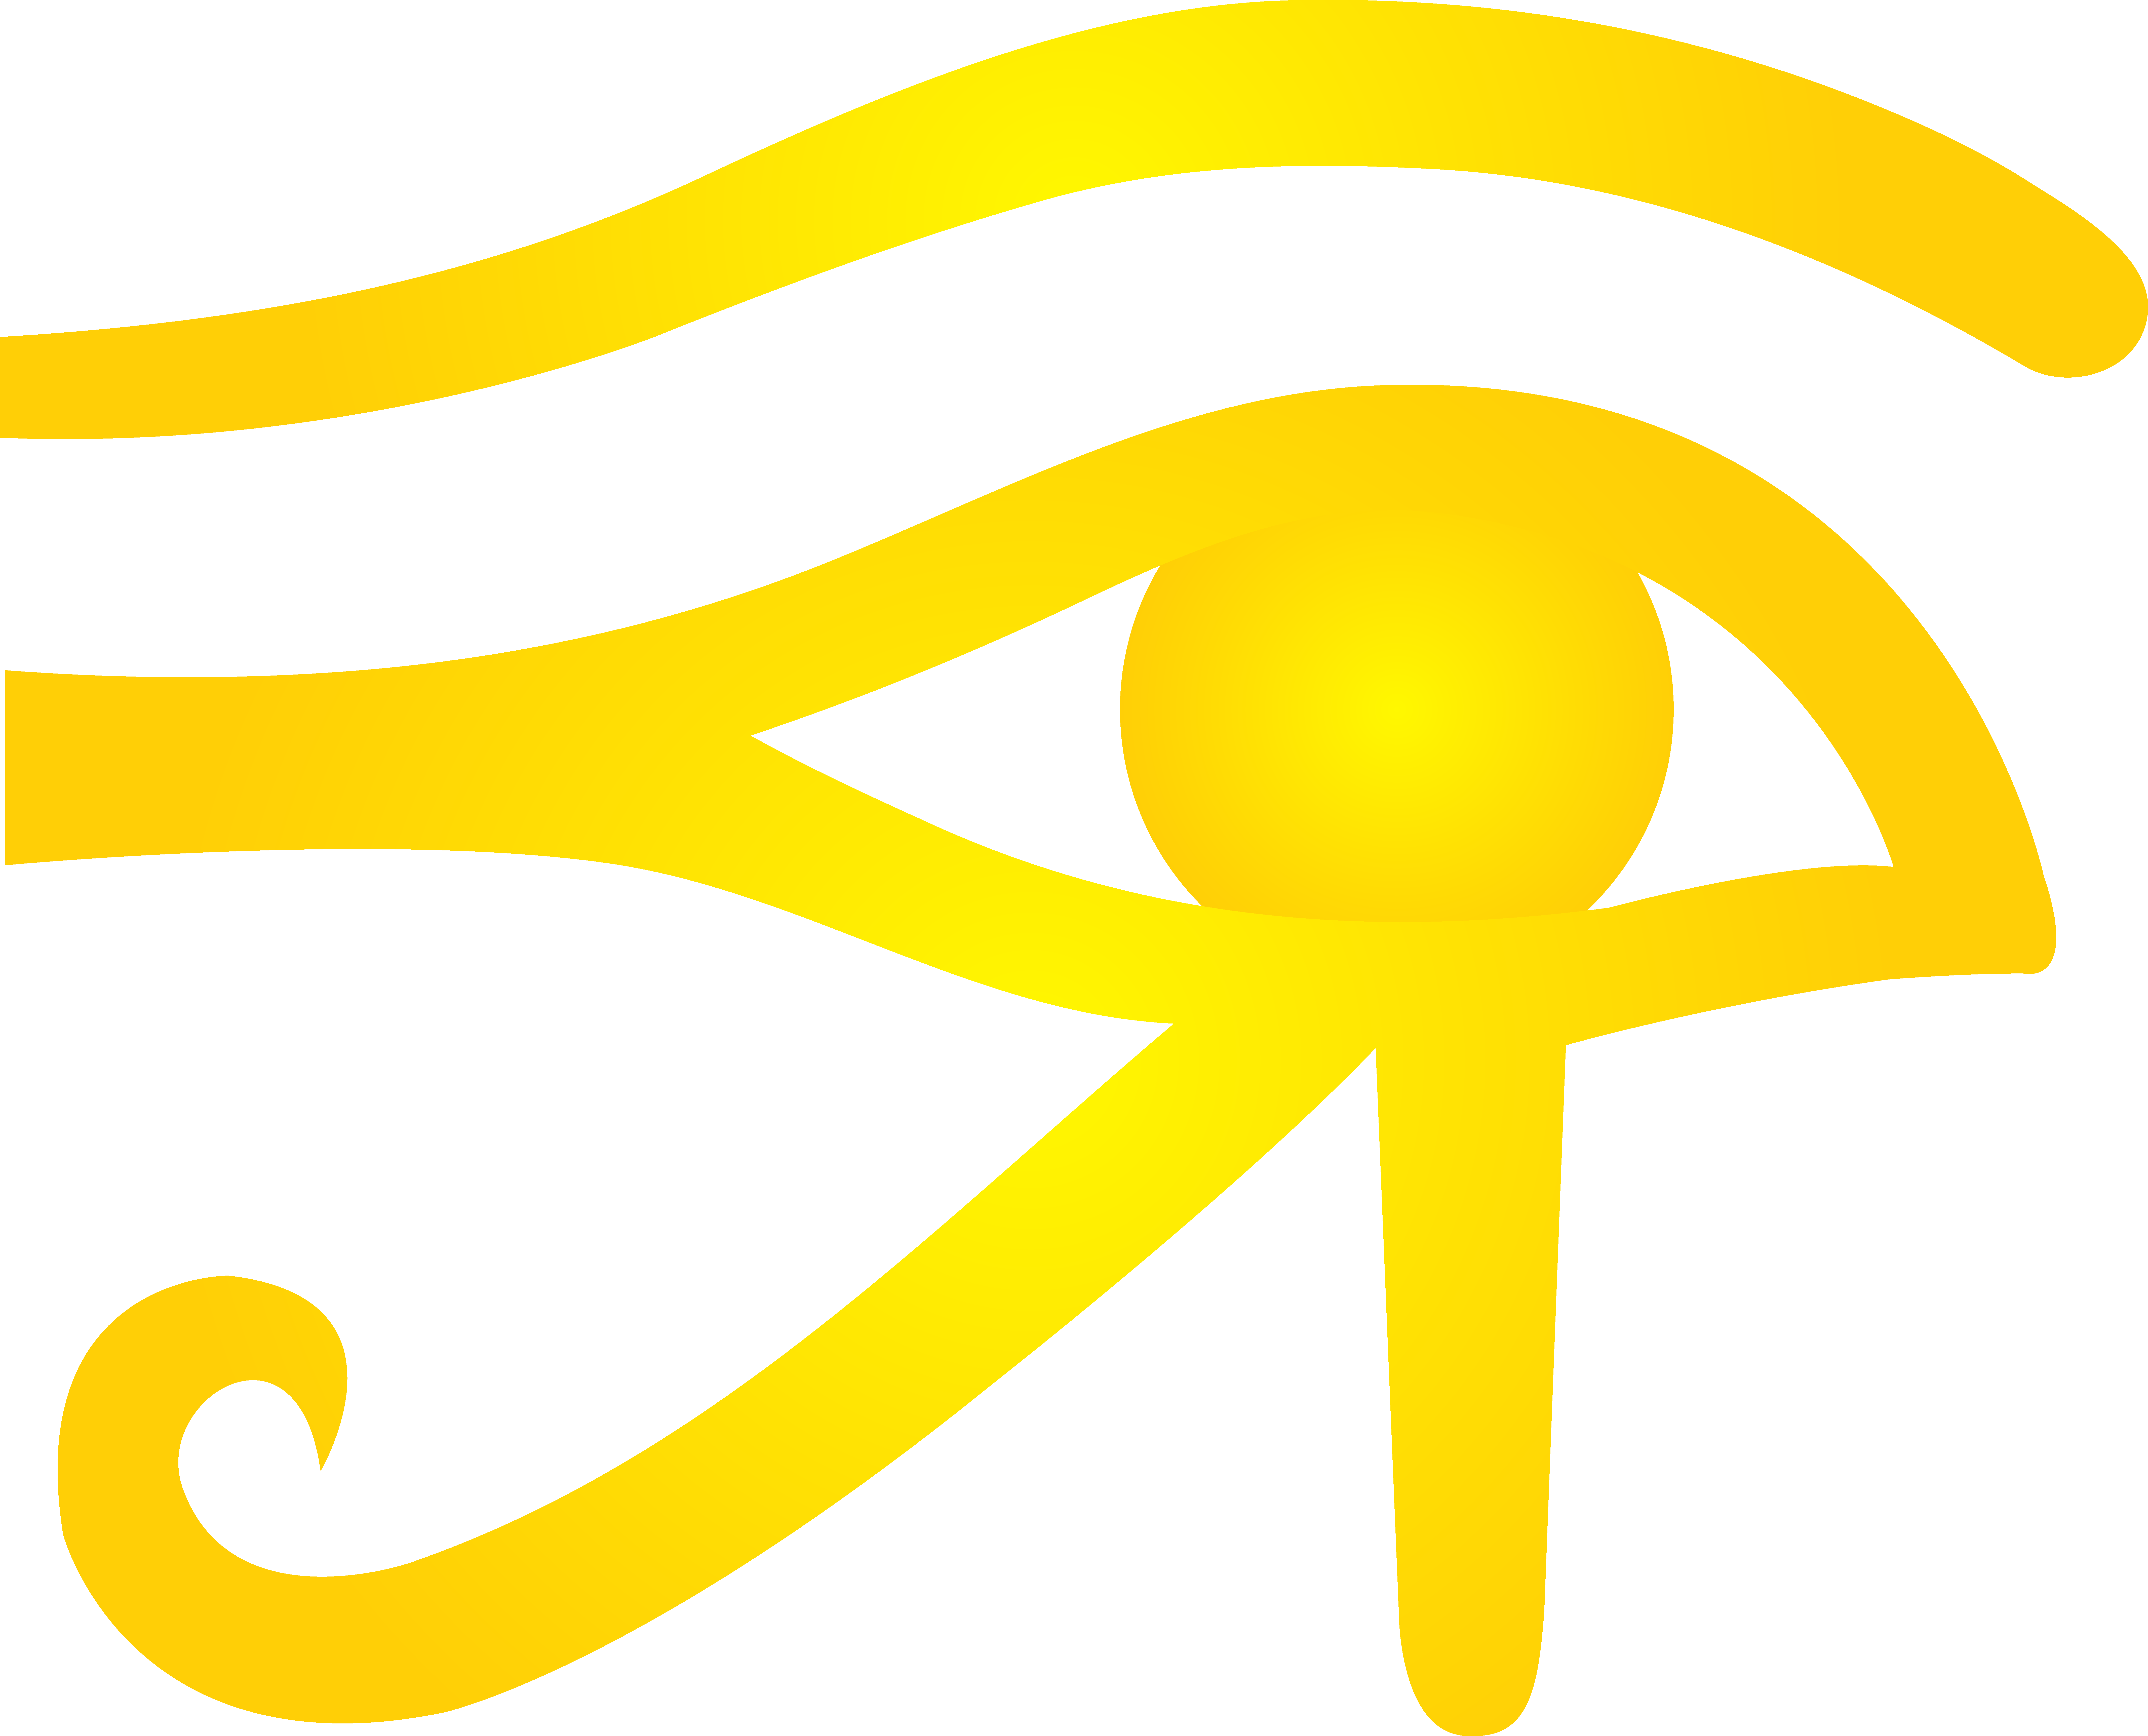 egypt clipart symbol